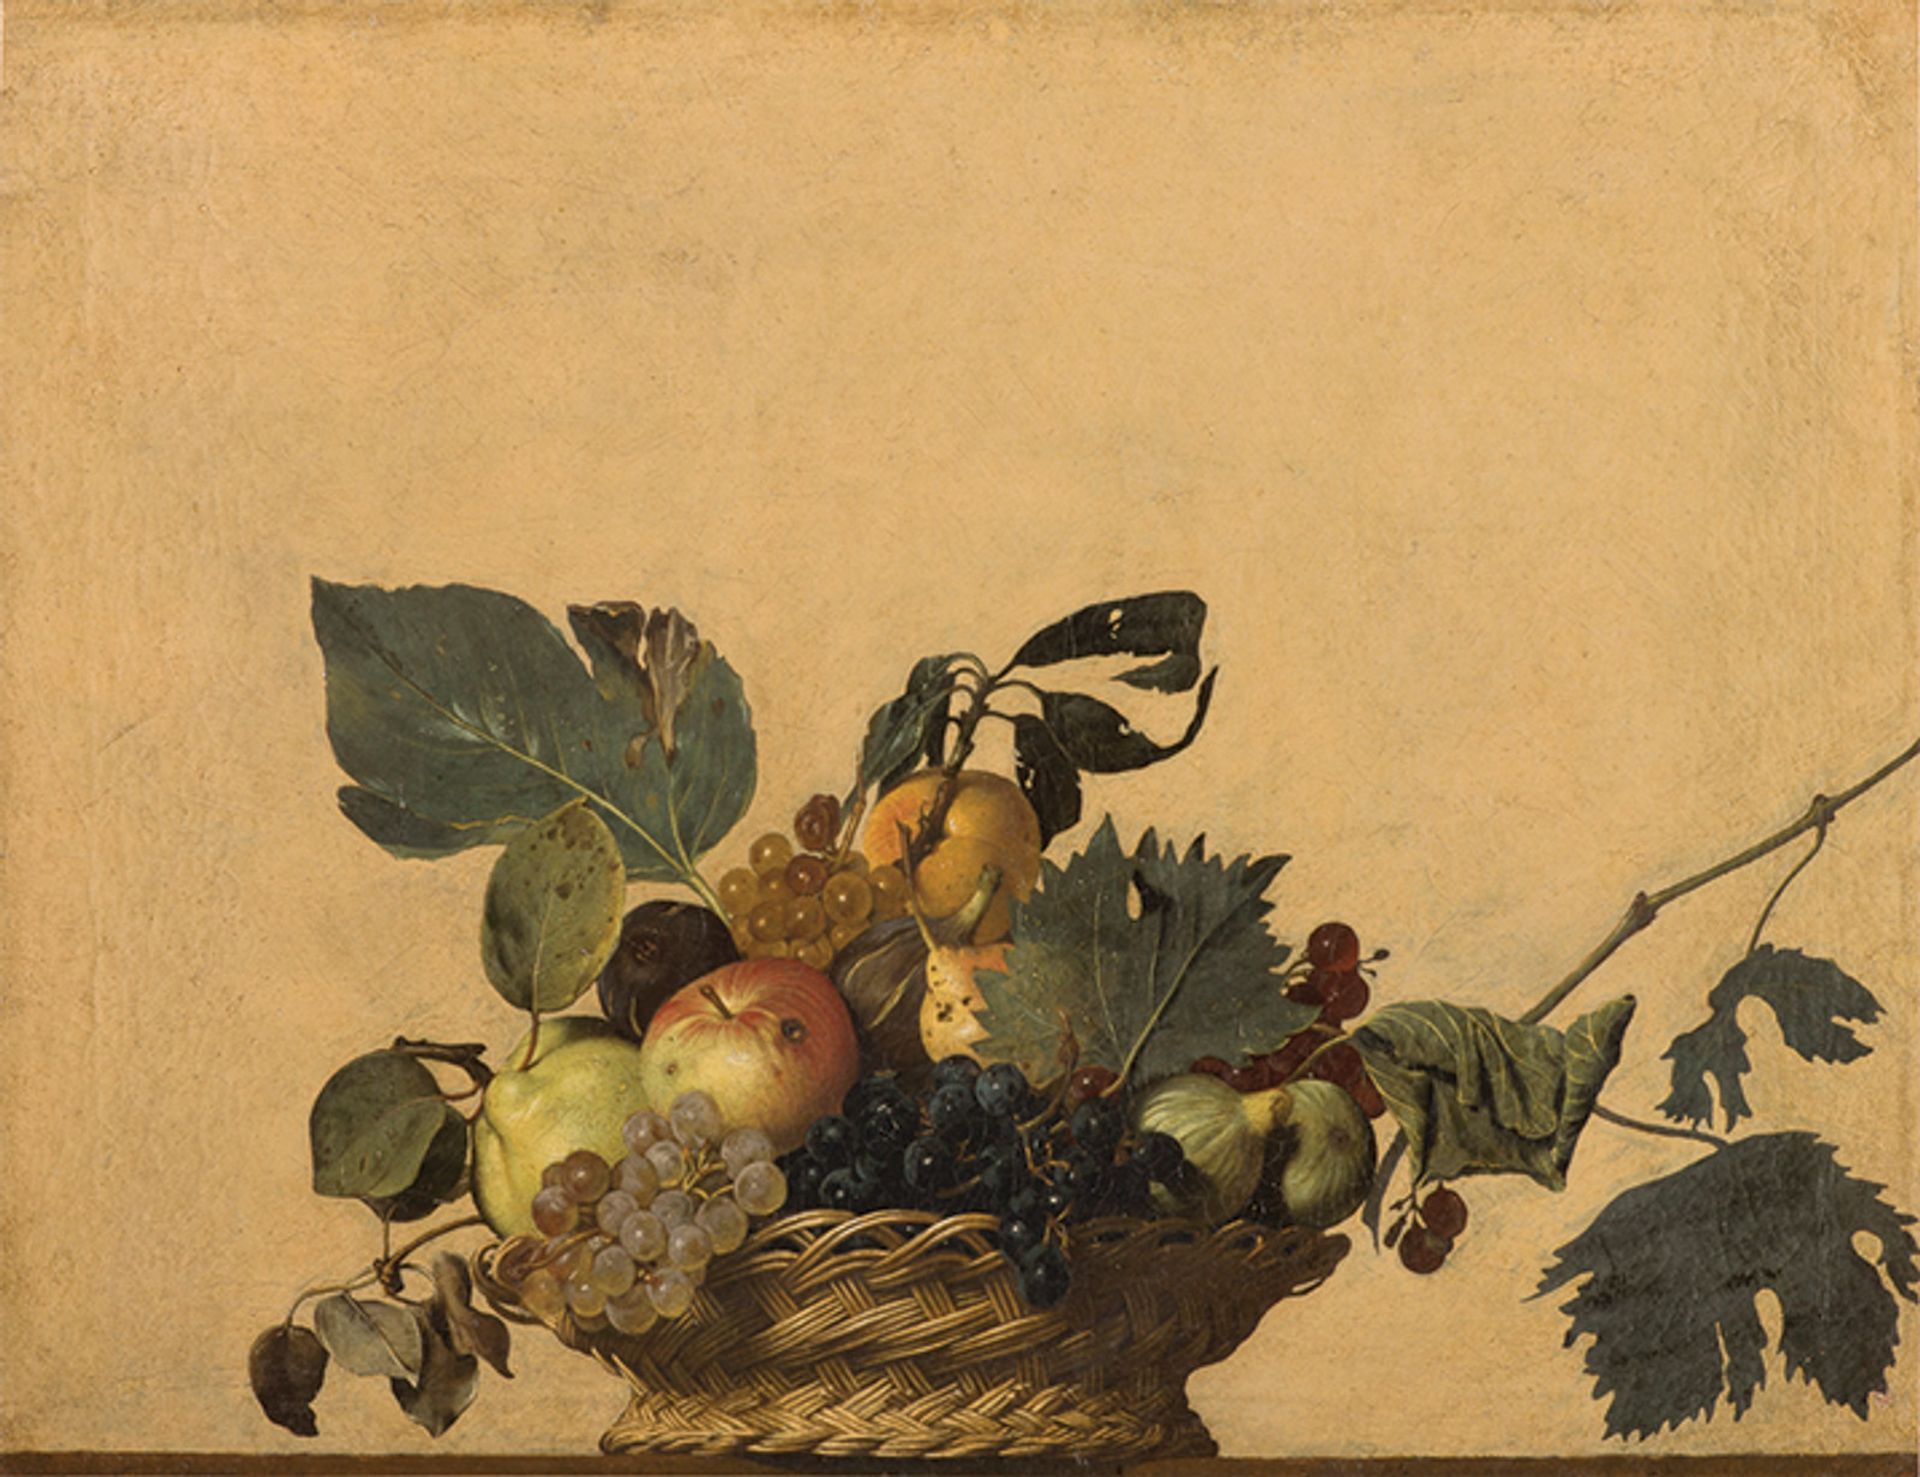 Canestra di Frutta של Caravaggio (קערת פירות, 1594-98), שעברה דיגיטציה ב-2021

באדיבות Veneranda Biblioteca Ambrosiana ו-Cinello